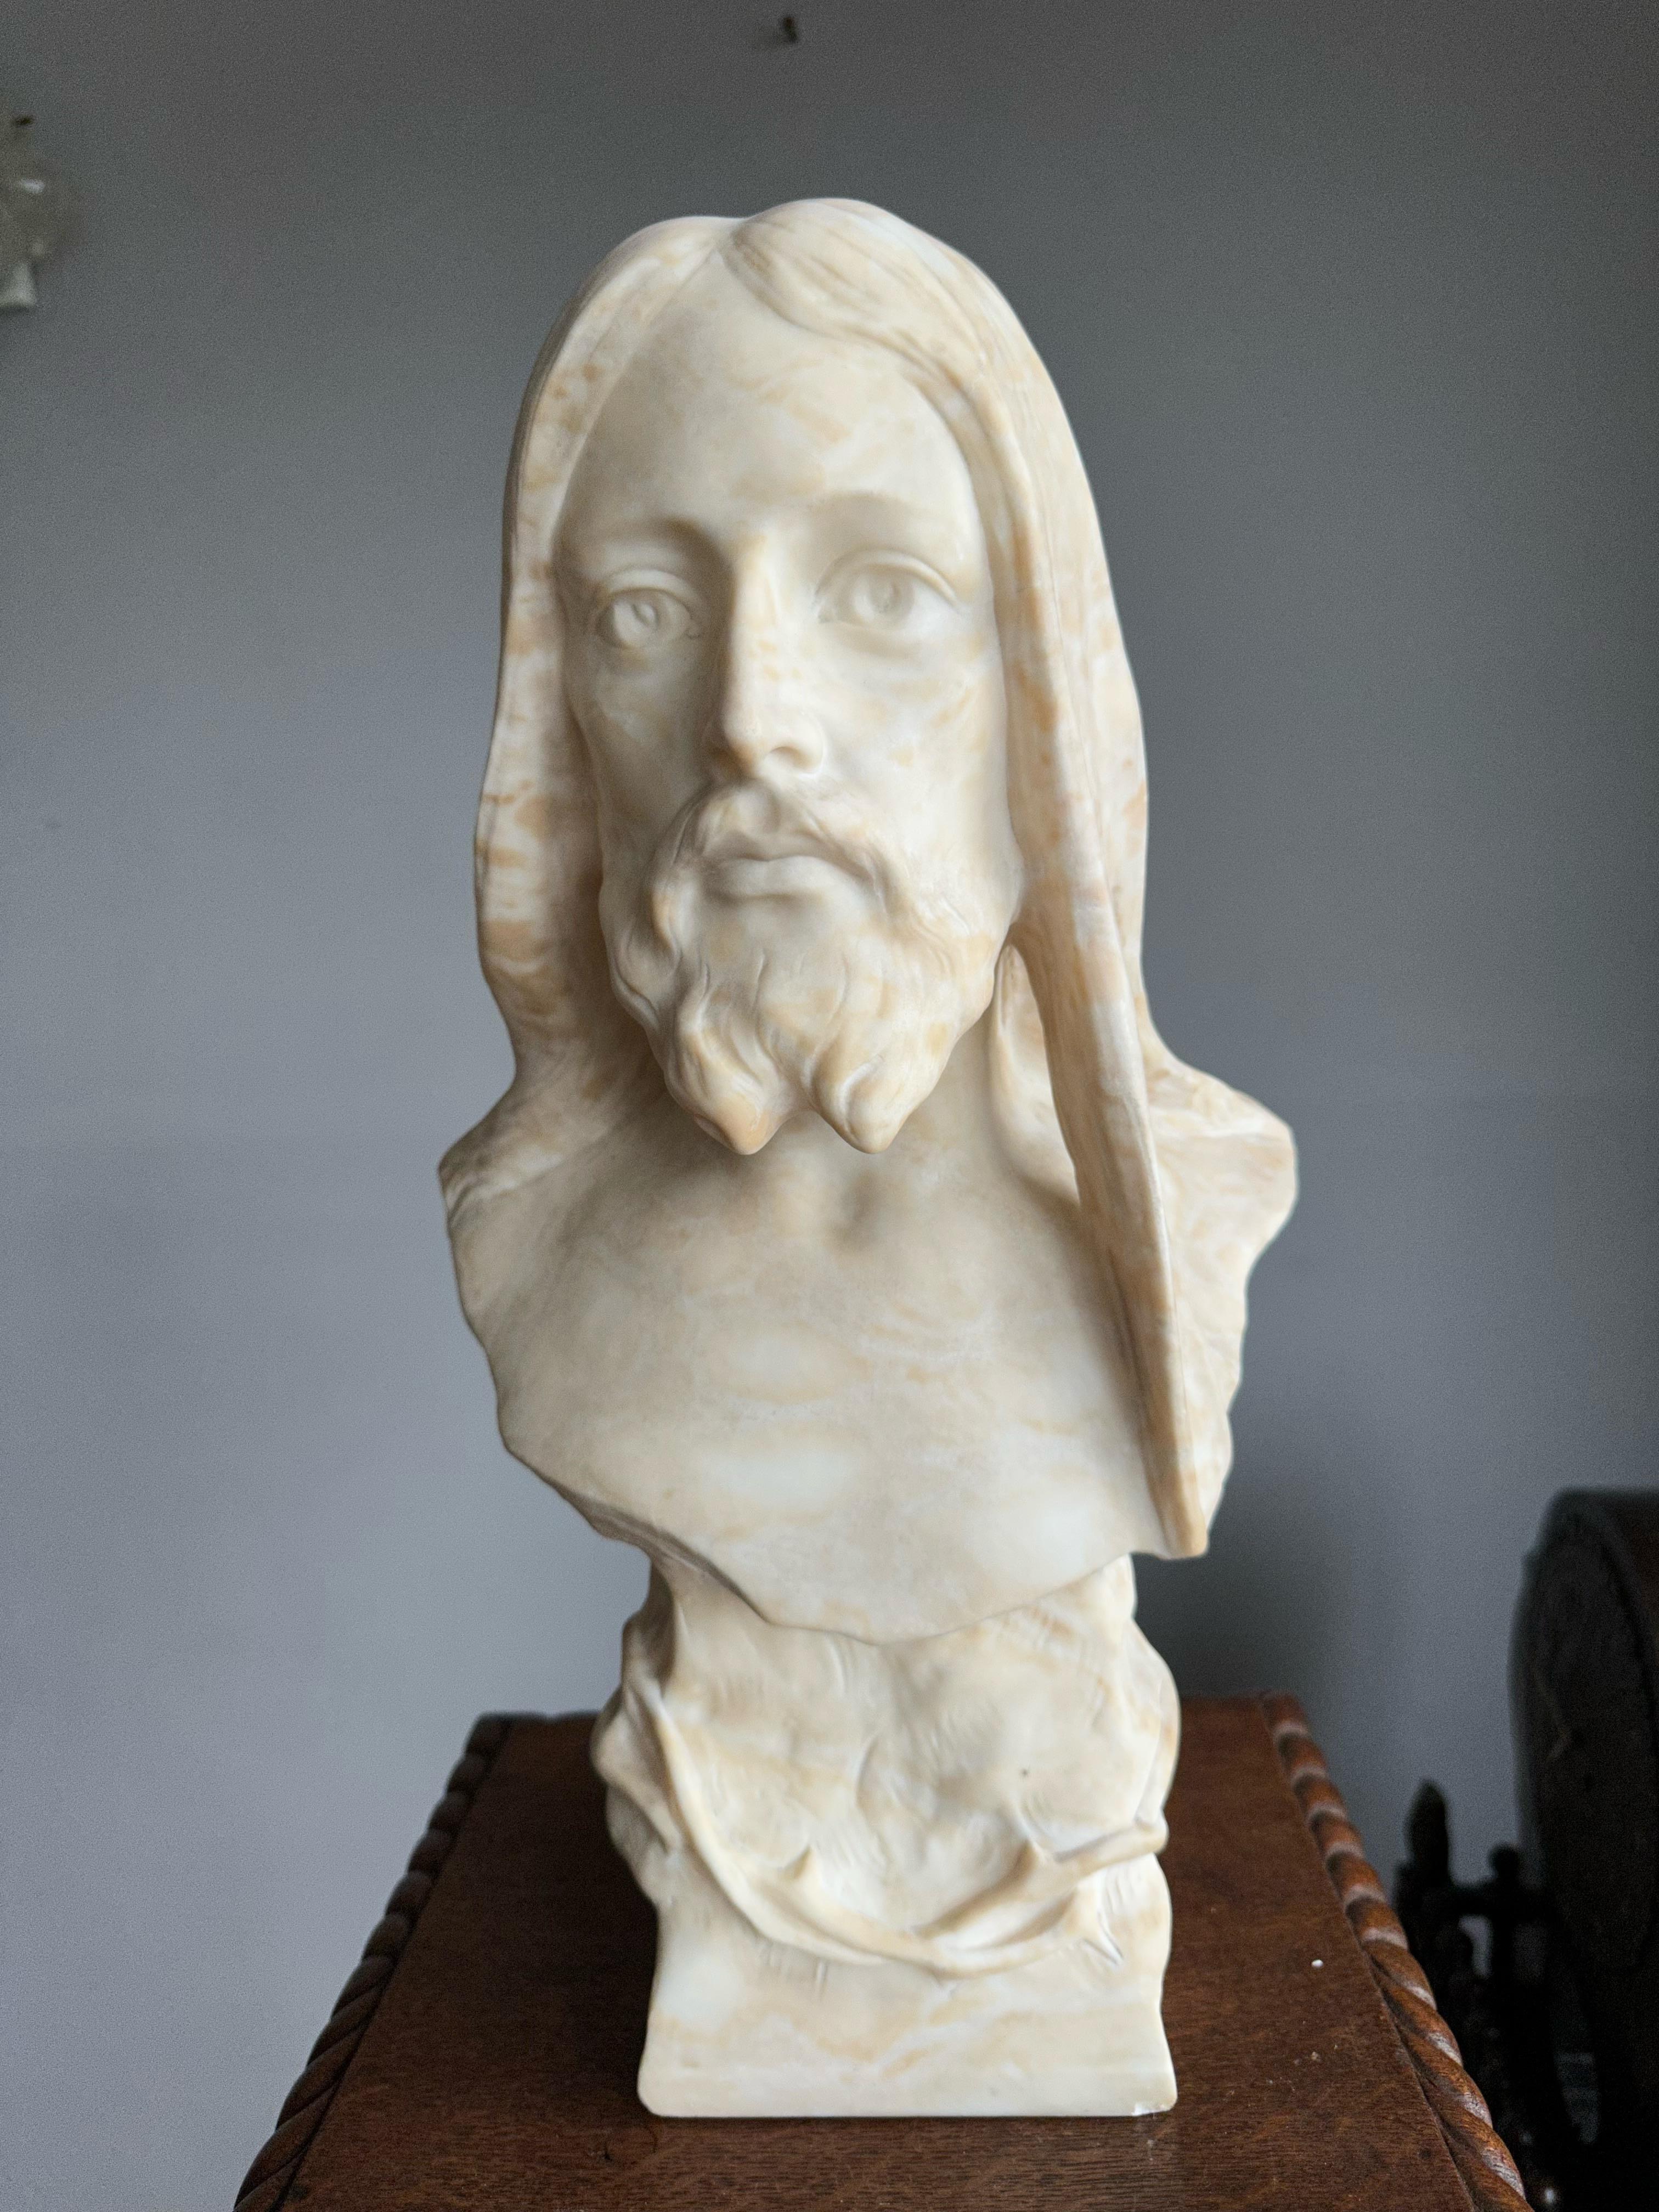 Antique, Early 1900 Large Hand Carved Alabaster Sculpture / Bust of Jesus Christ For Sale 12